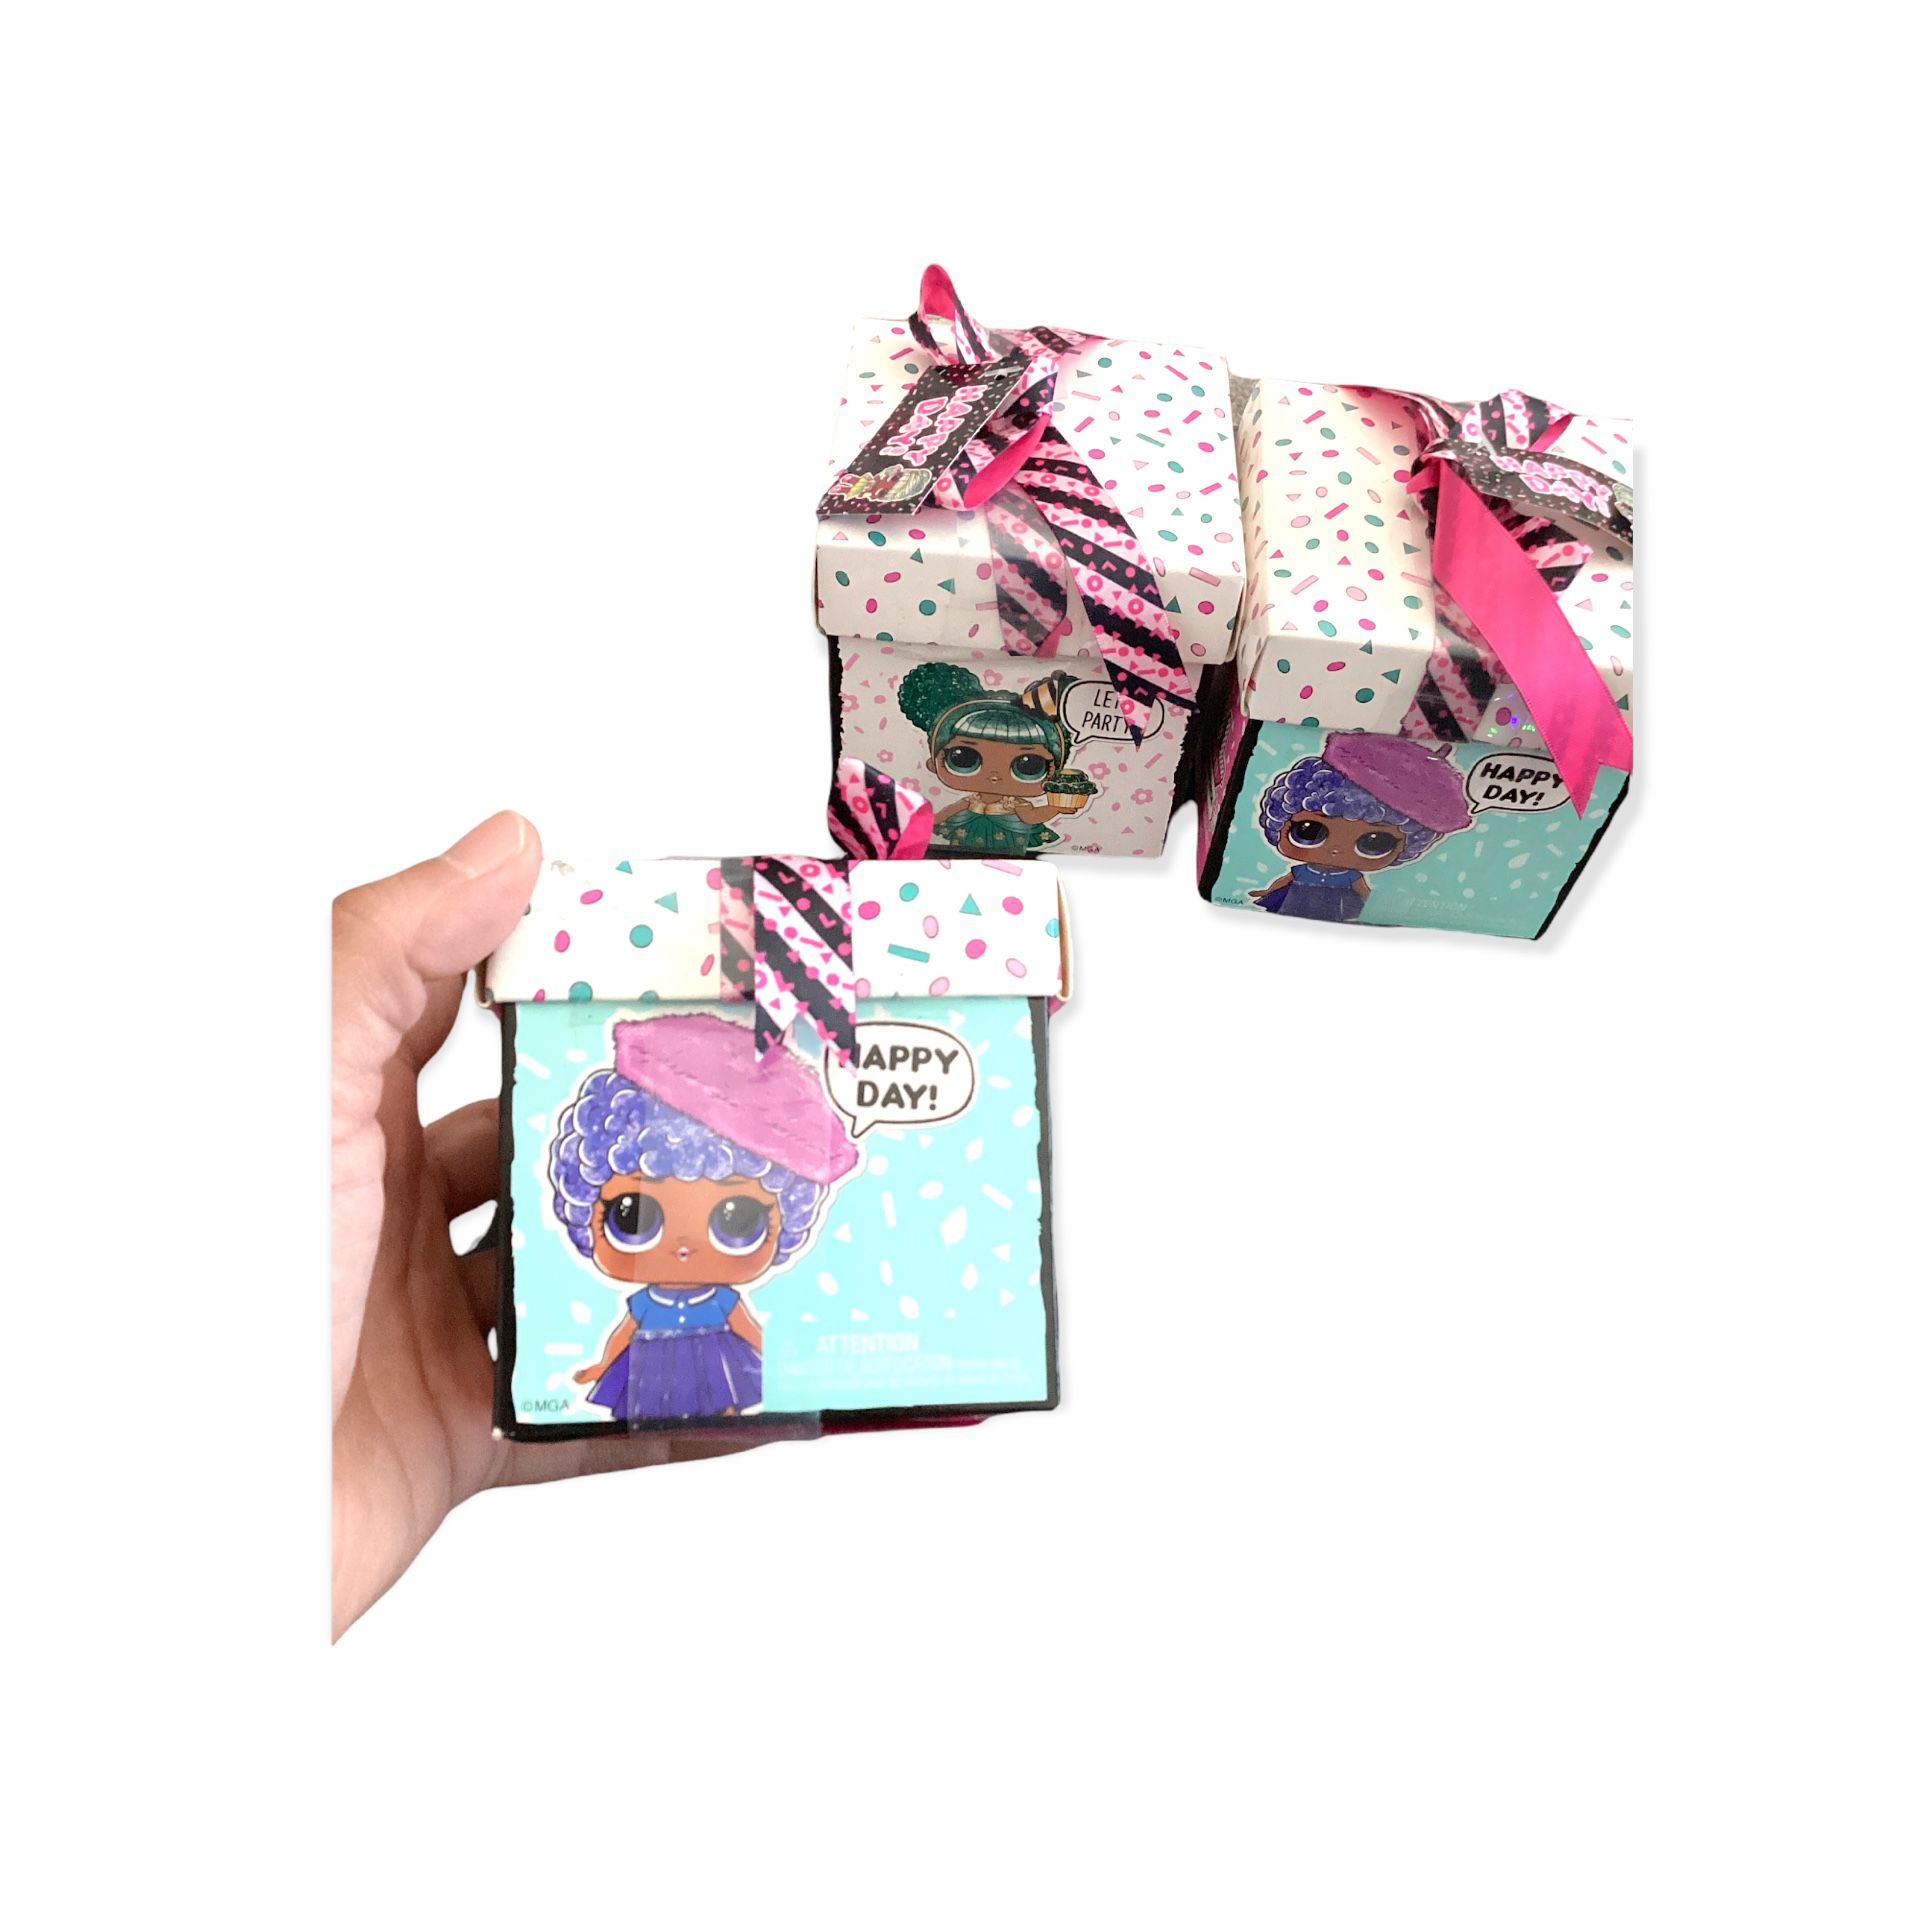 LOL Surprise Present Surprise Doll Gift Box 8 Surprises! New Sealed